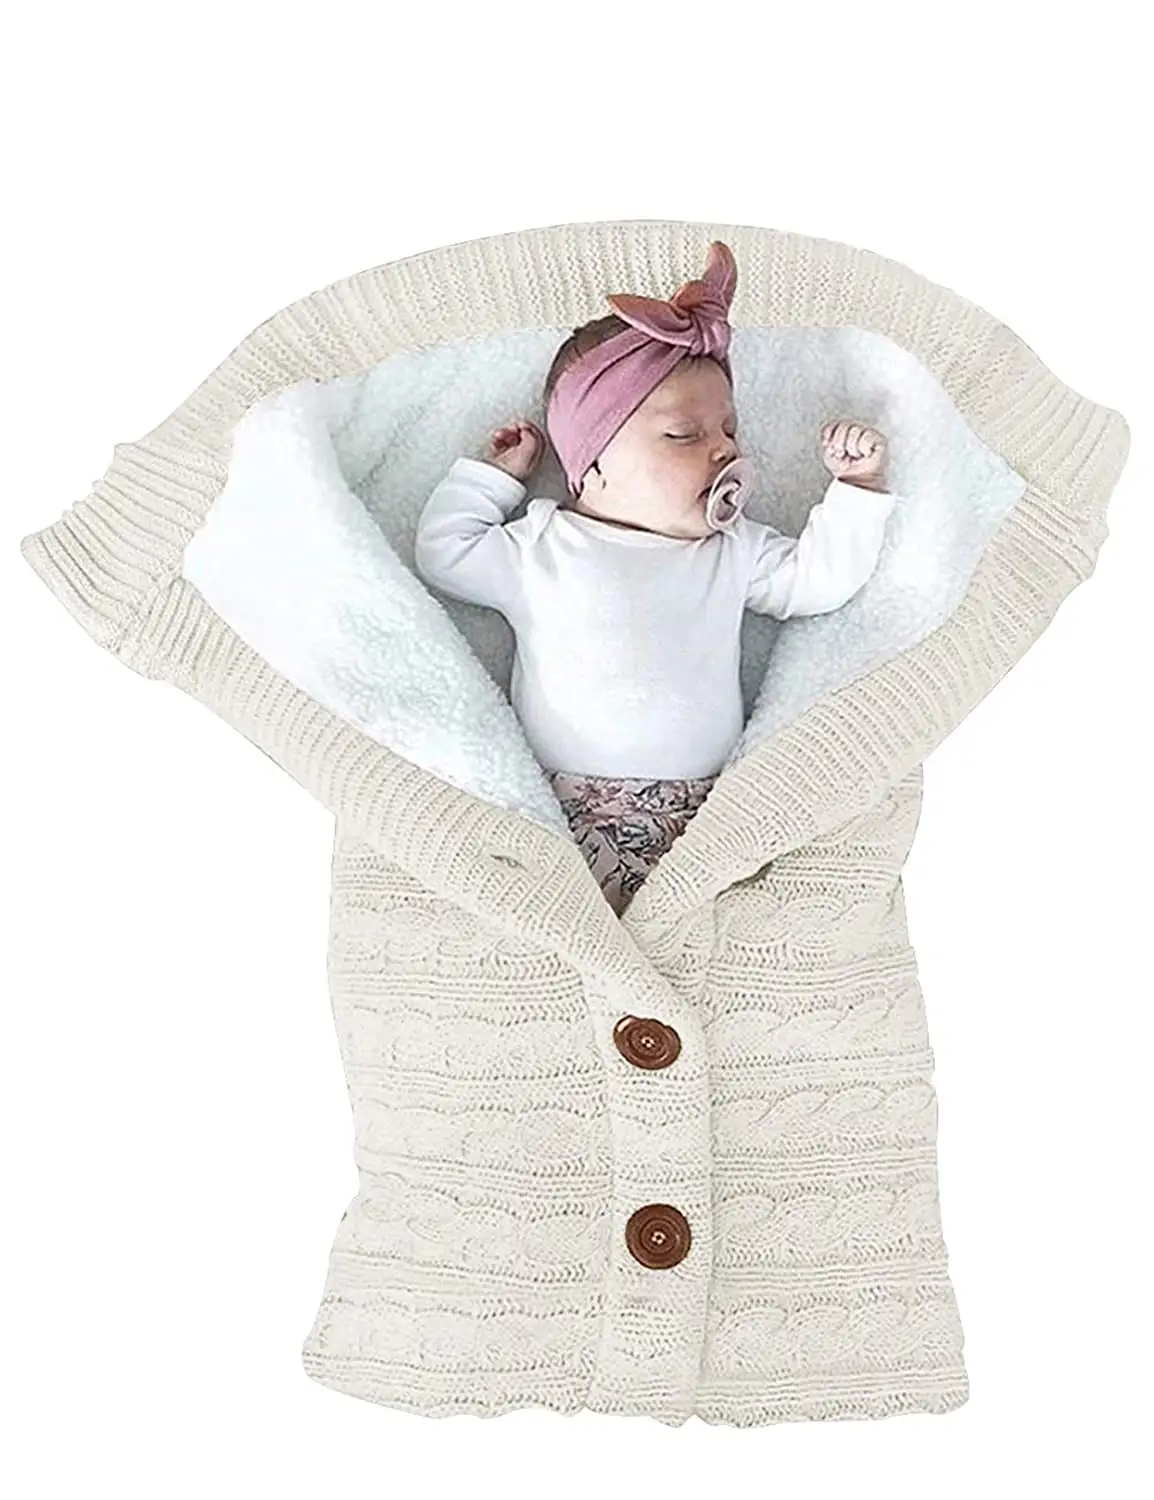 Baby Used Knit Wrap Swaddle Sleeping Soft Warm Blankets Baby Swaddle Blanket